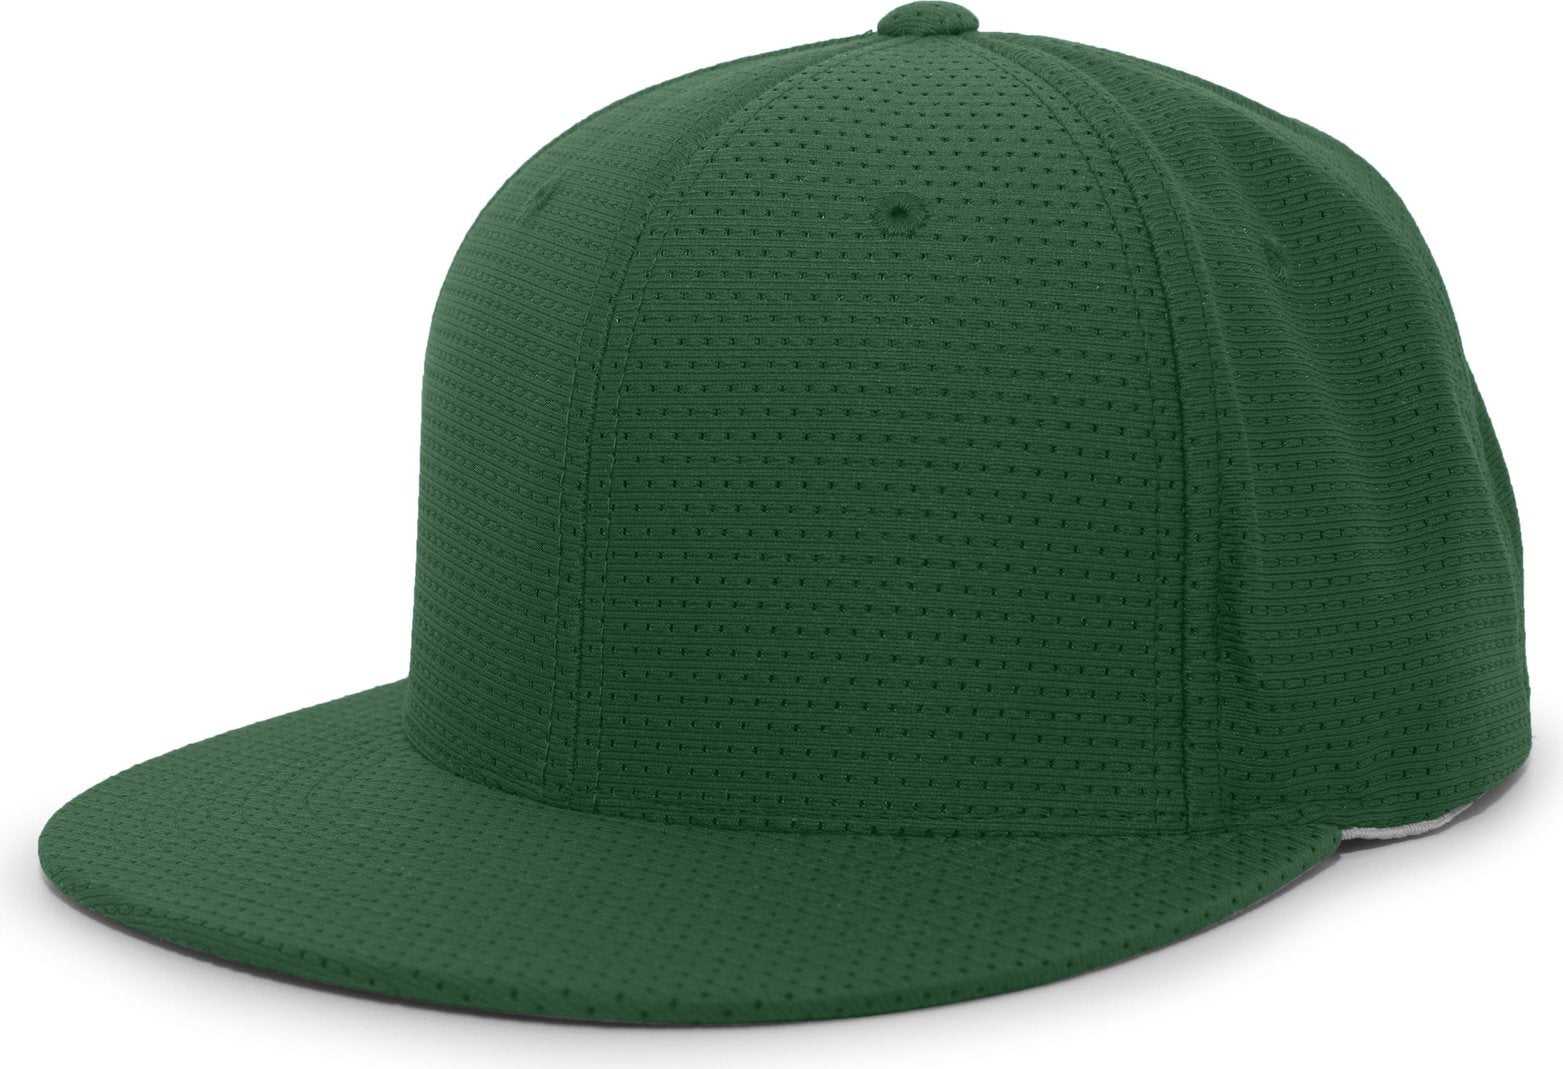 Pacific Headwear ES818 Air Jersey Performance Flexfit Cap - Dark Green - HIT a Double